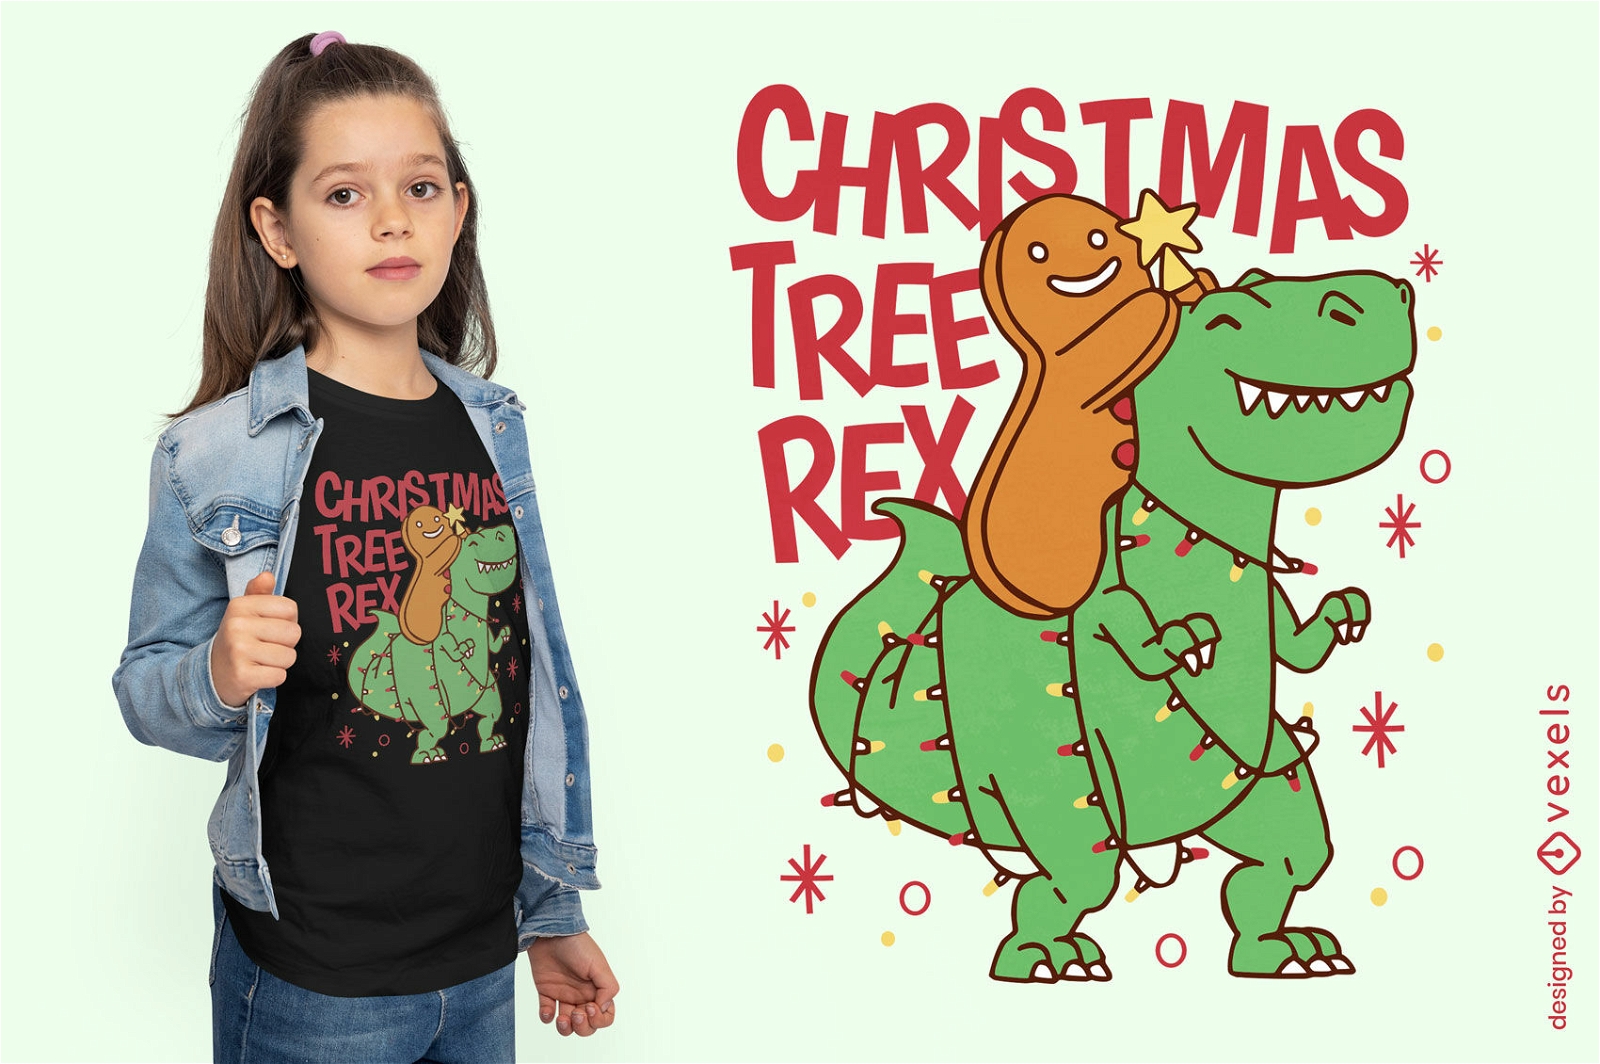 T-rex e biscoito de gengibre design de t-shirt de natal